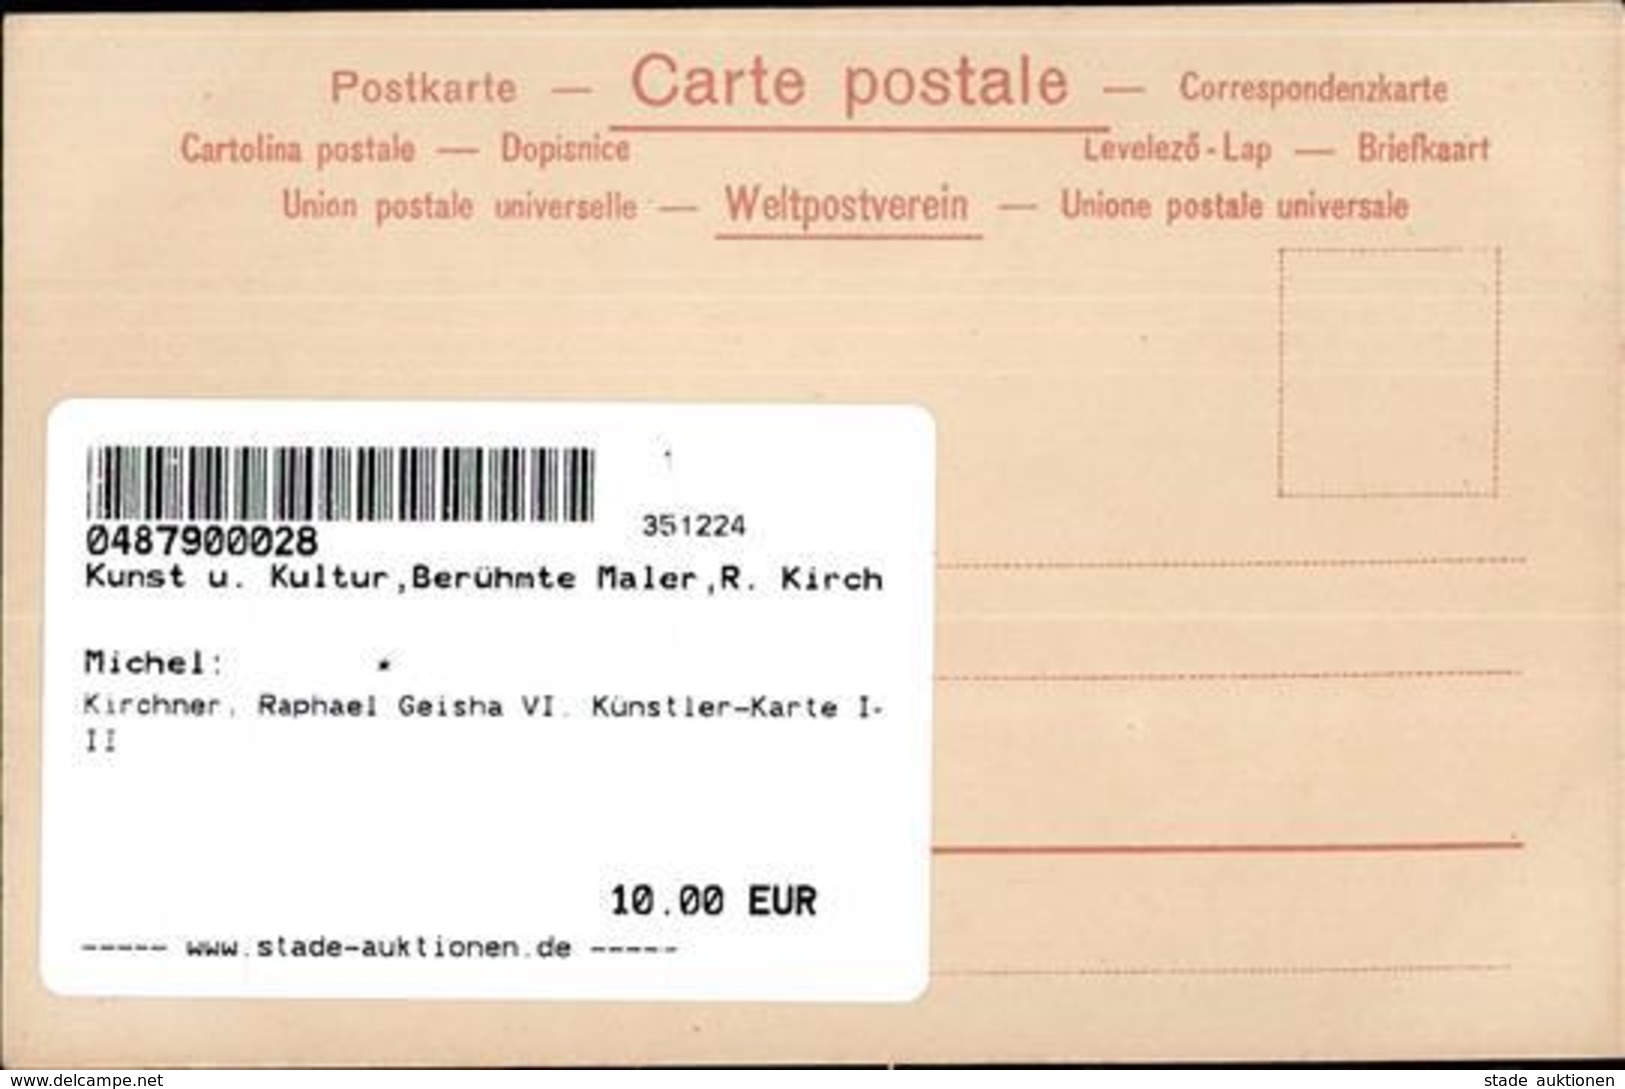 Kirchner, Raphael Geisha VI. Künstler-Karte I-II - Kirchner, Raphael